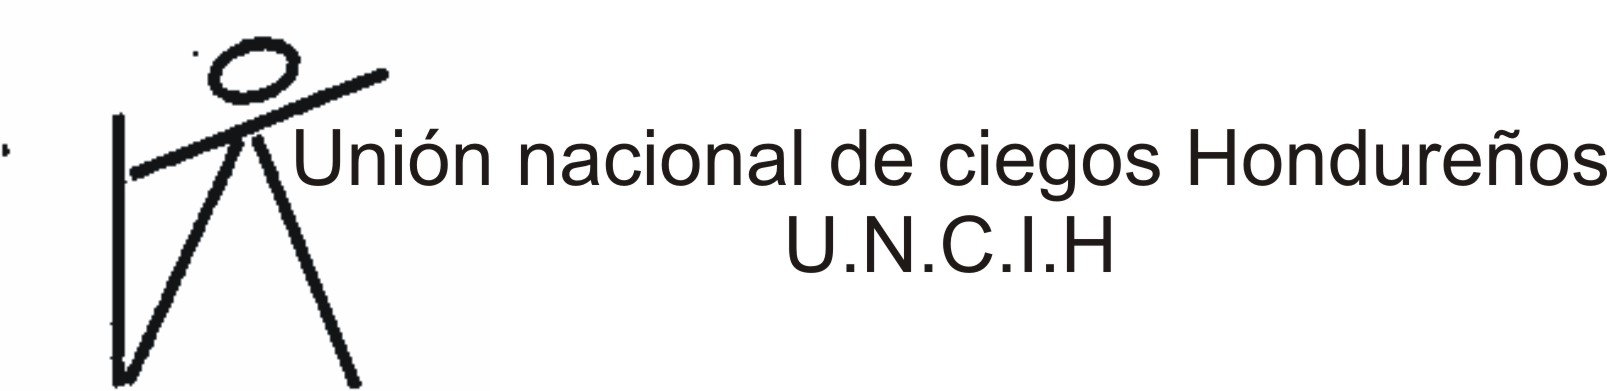 Union Nacional de ciegos Hondureños